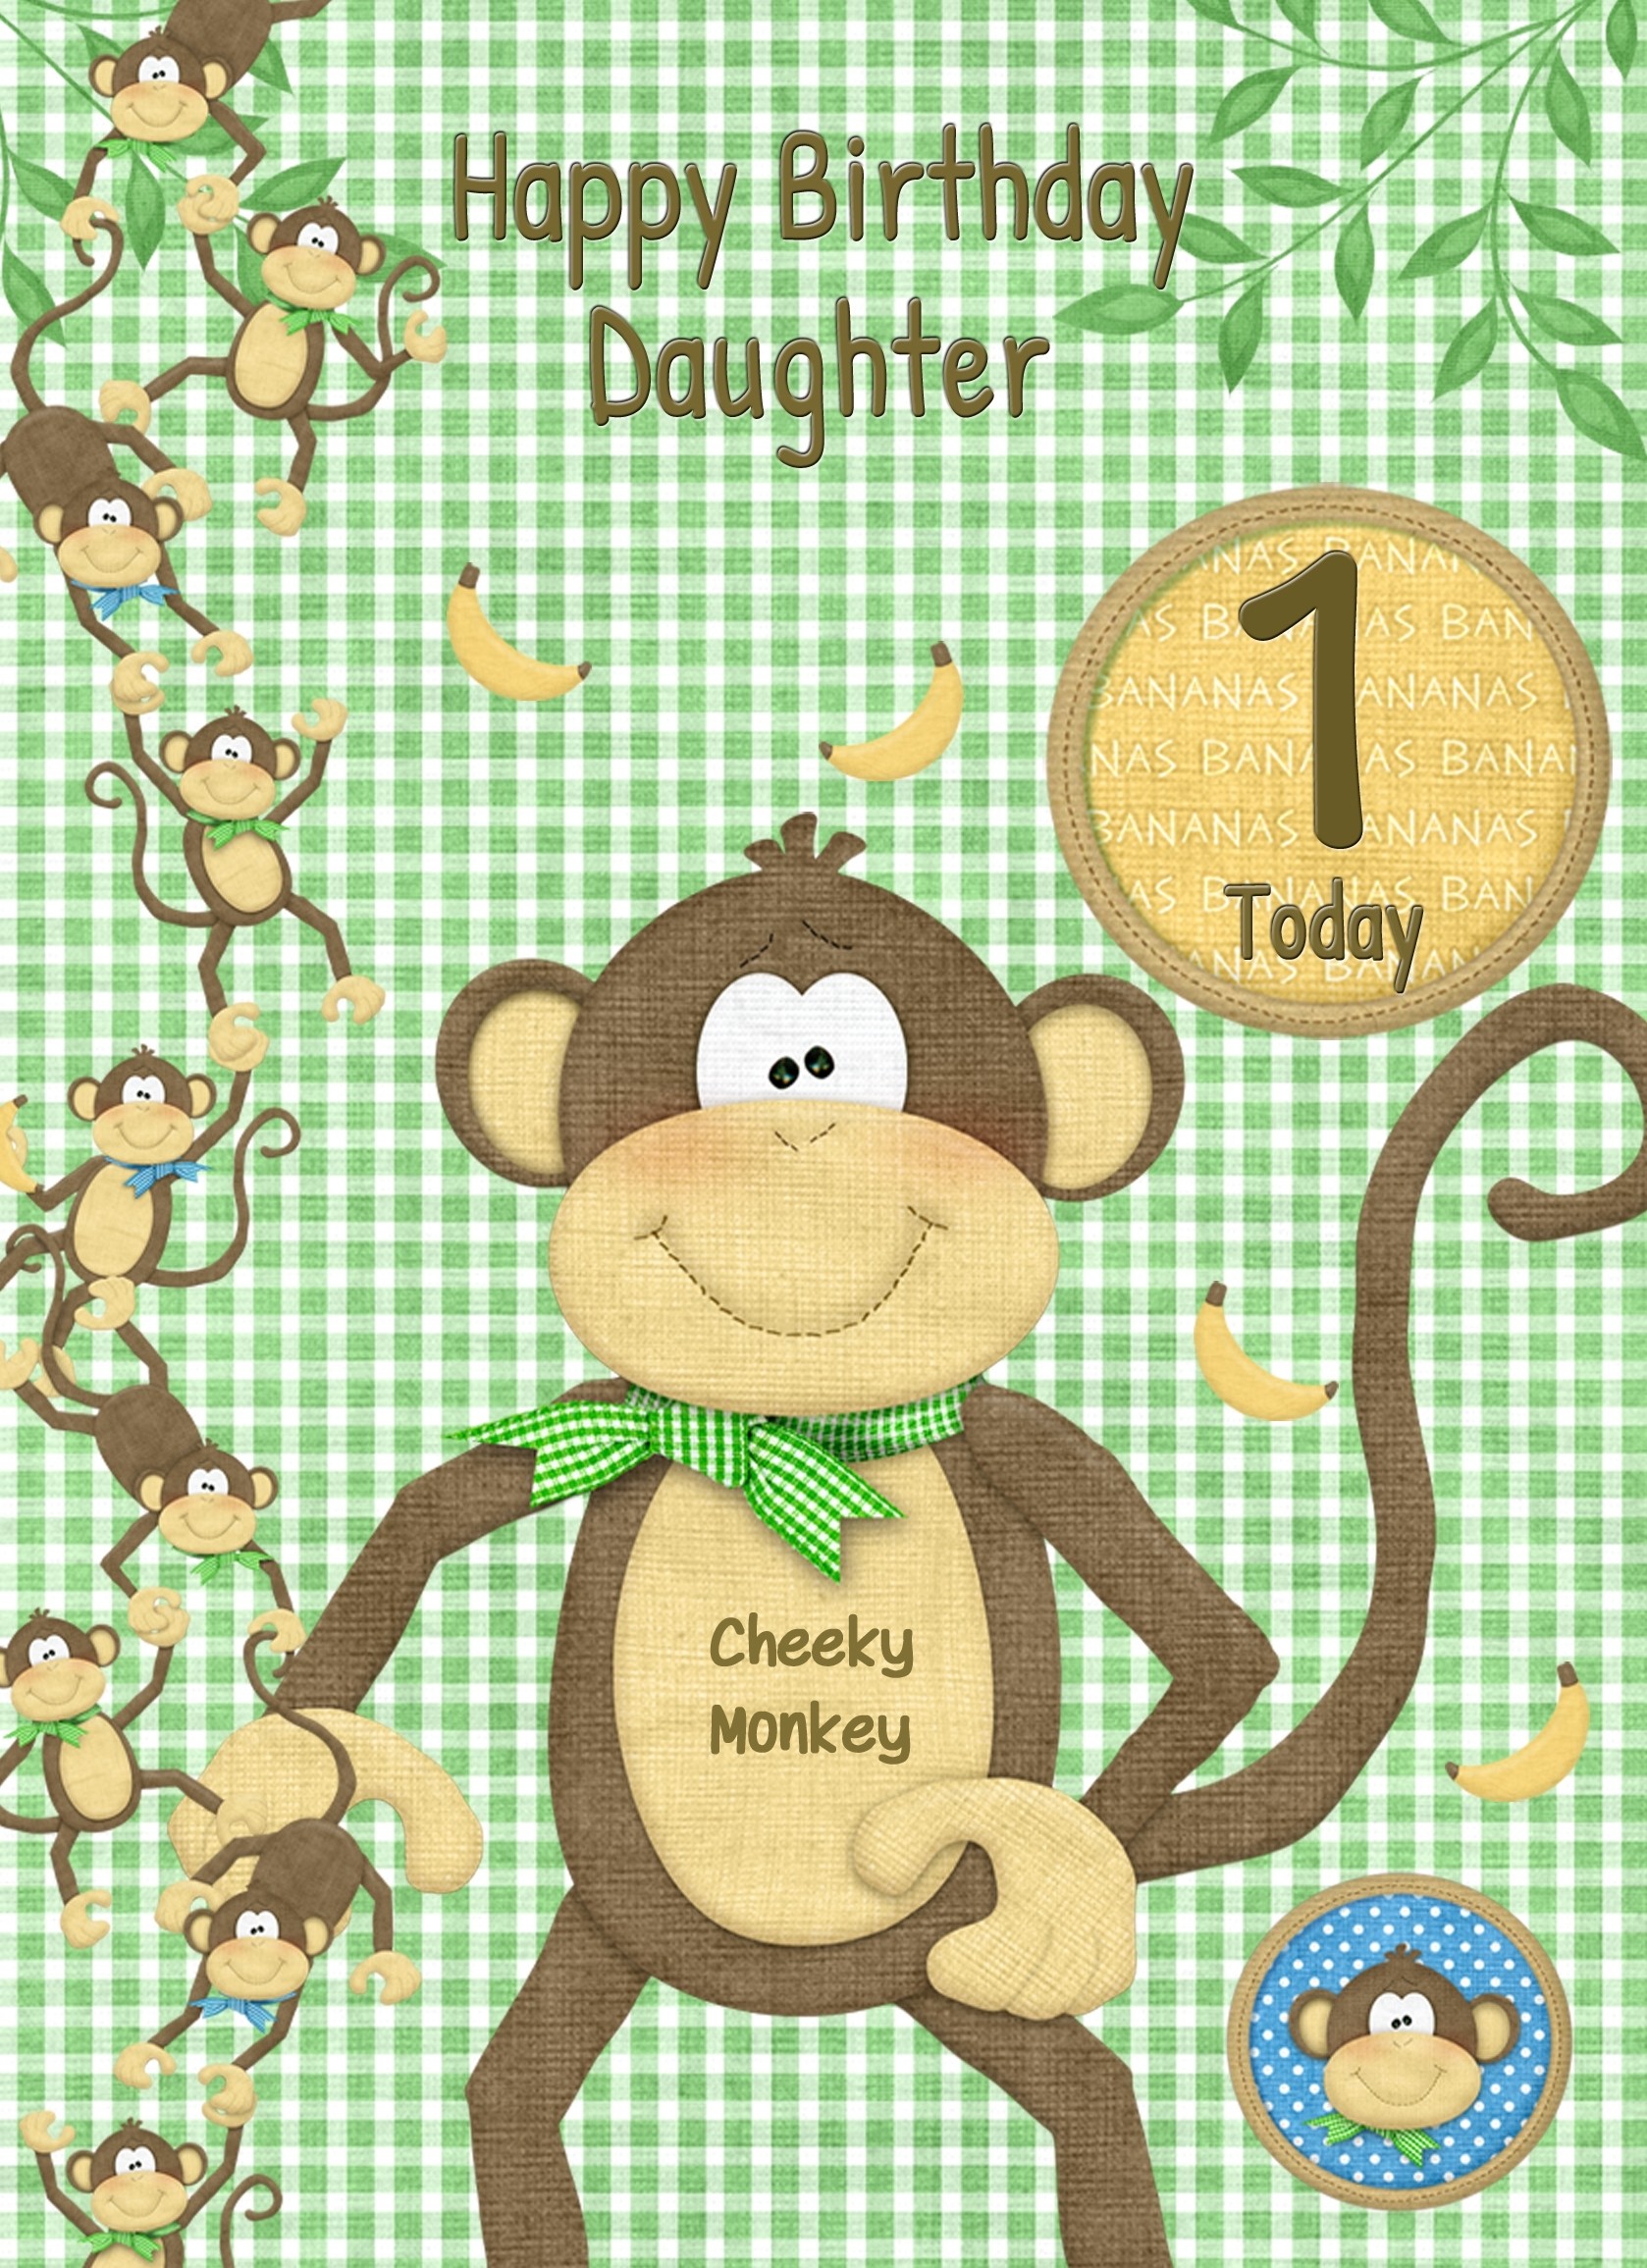 Kids 1st Birthday Cheeky Monkey Cartoon Card for Daughter